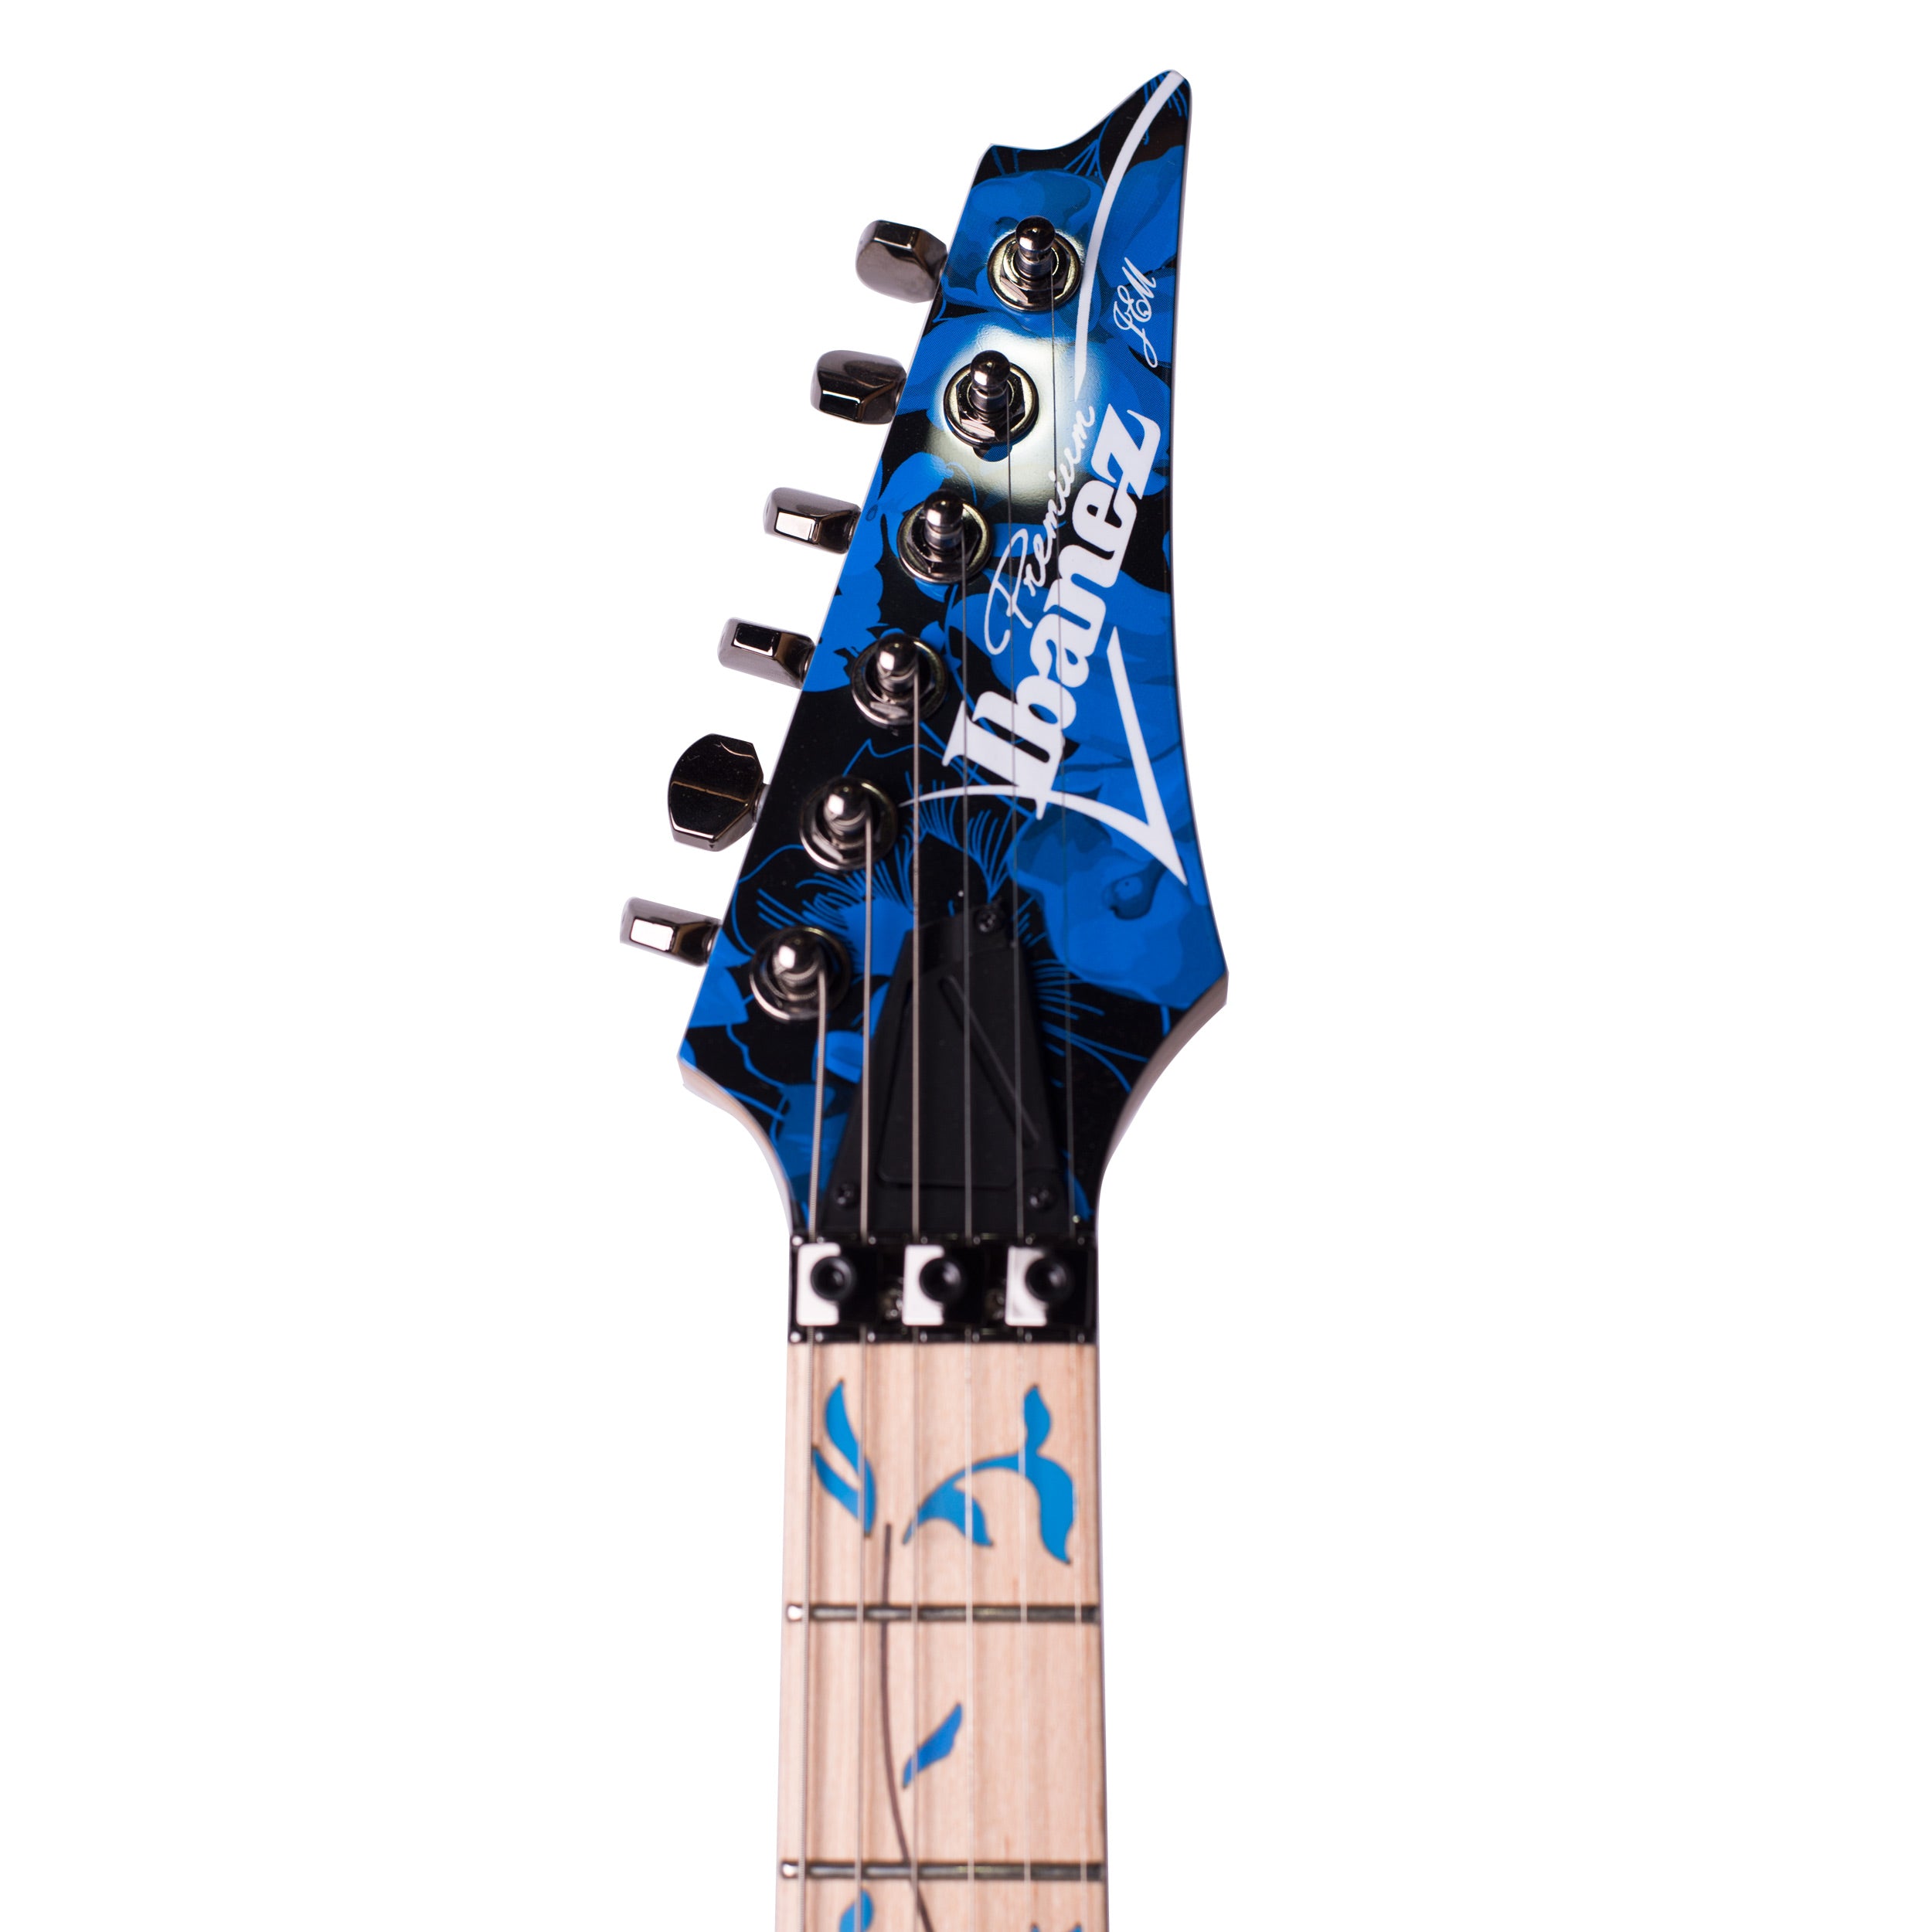 Ibanez JEM77PBFP Steve Vai Signature Jem Electric Guitar in Blue